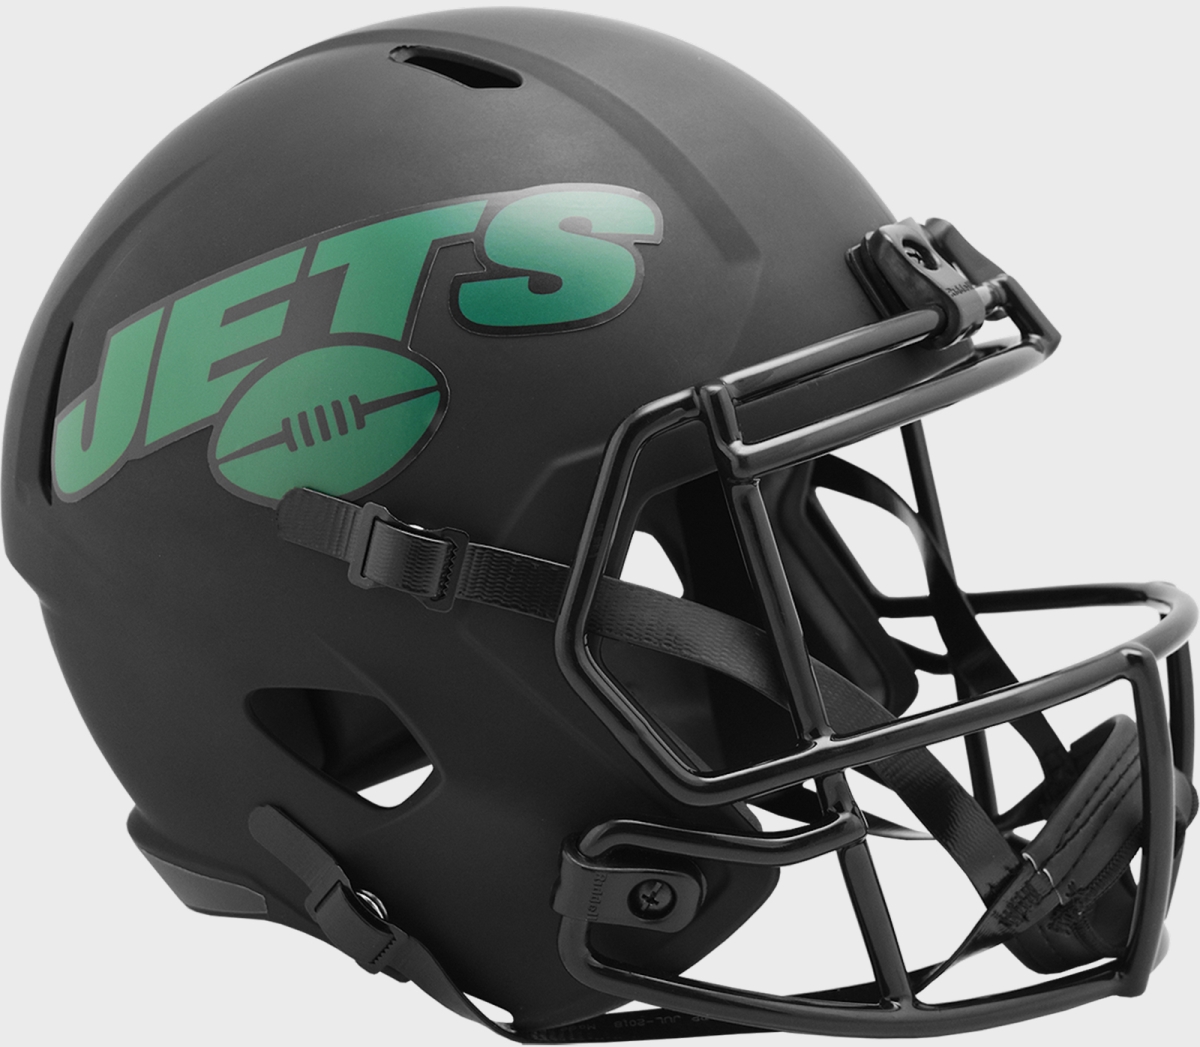 Radtke Sports jets-ecl-rep   York Jets Unsigned Eclipse Black Full Size Riddell Helmet